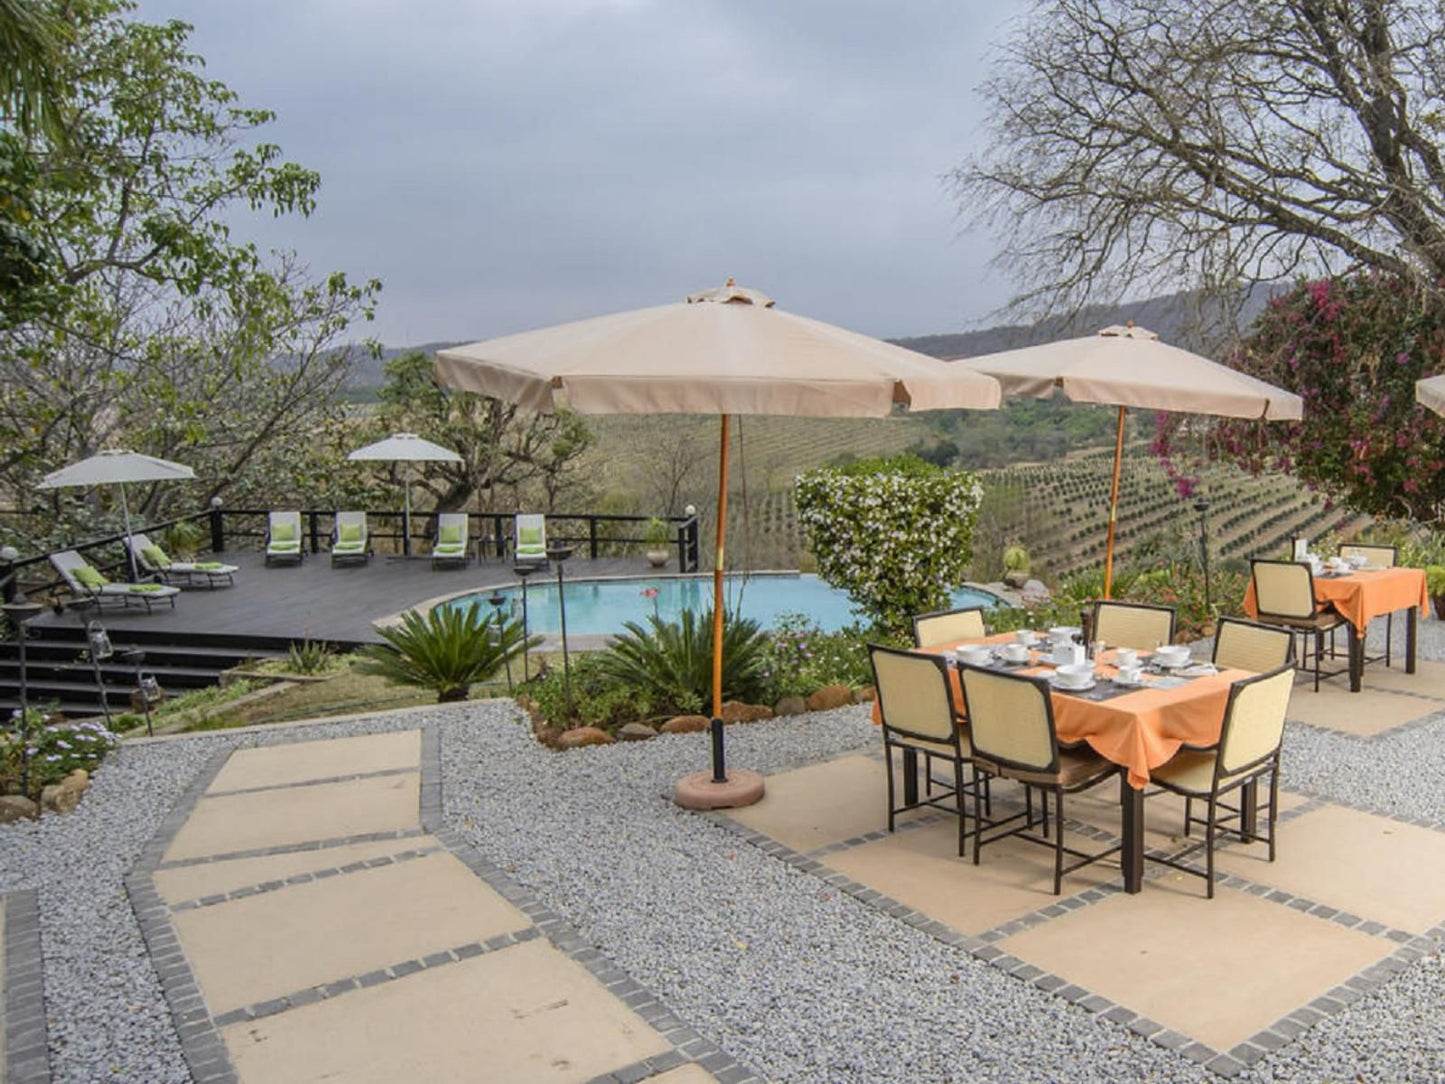 Abangane Guest Lodge Hazyview Mpumalanga South Africa Garden, Nature, Plant, Swimming Pool